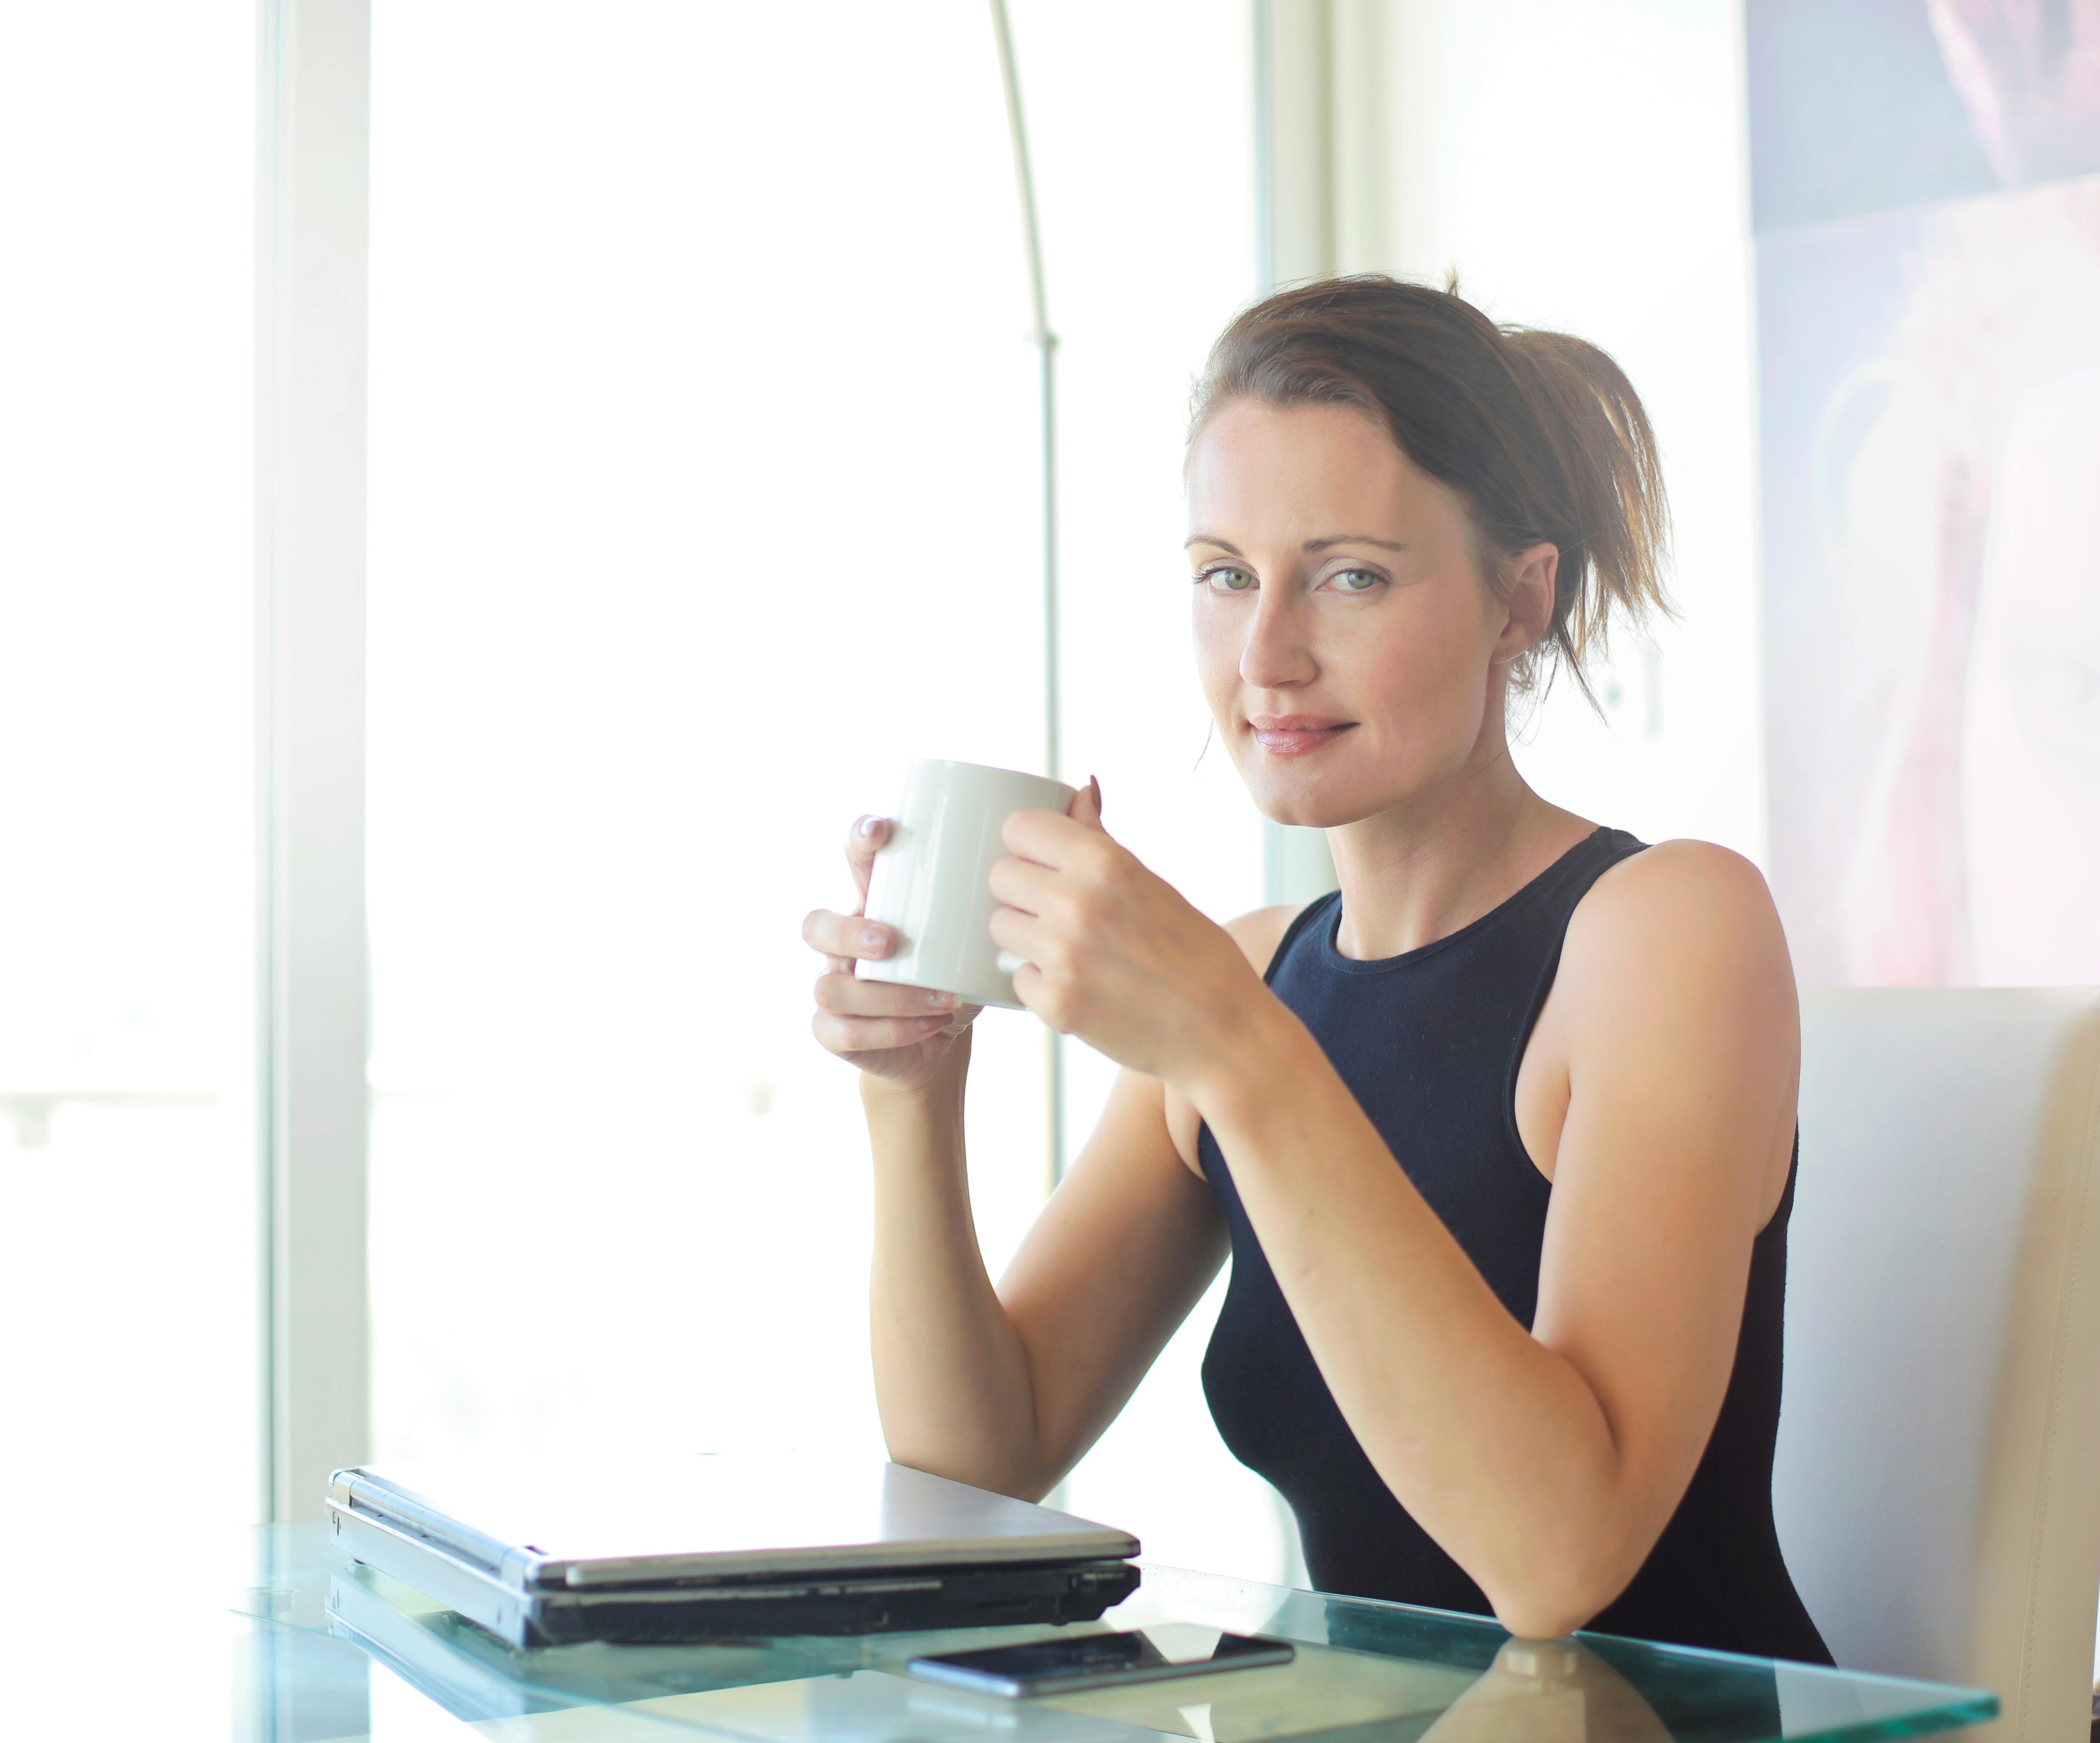 A woman in a black tank top holding a white ceramic mug. | Source: Pexels